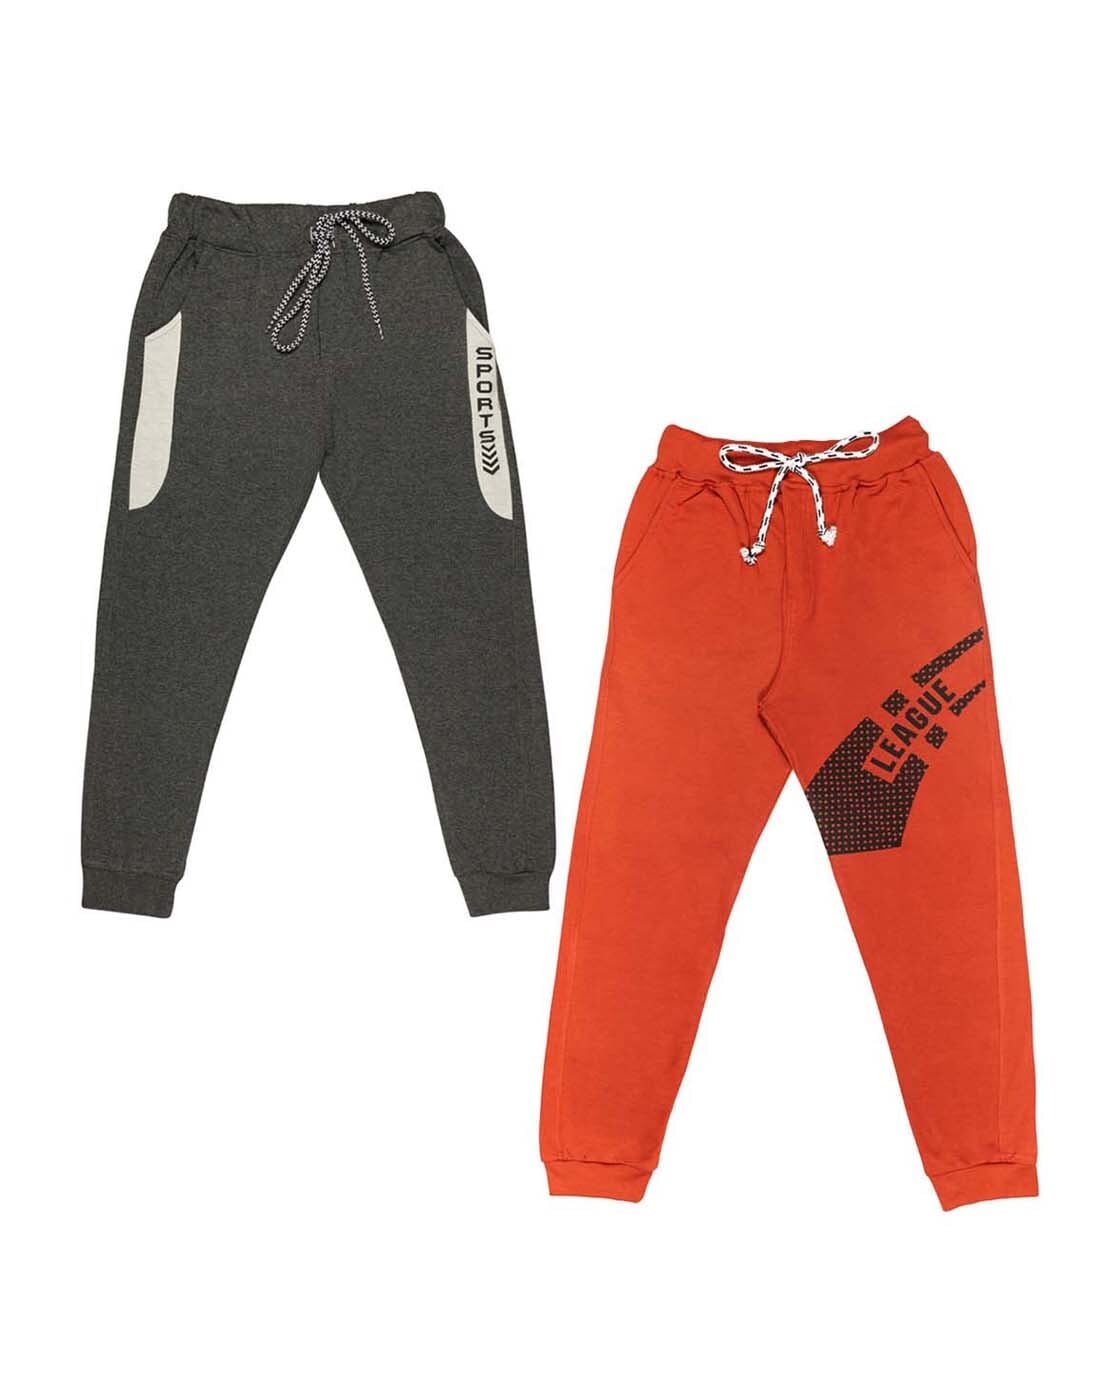 Athletic Works Boys Tricot Track Pants, Sizes 4-18 & Husky - Walmart.com